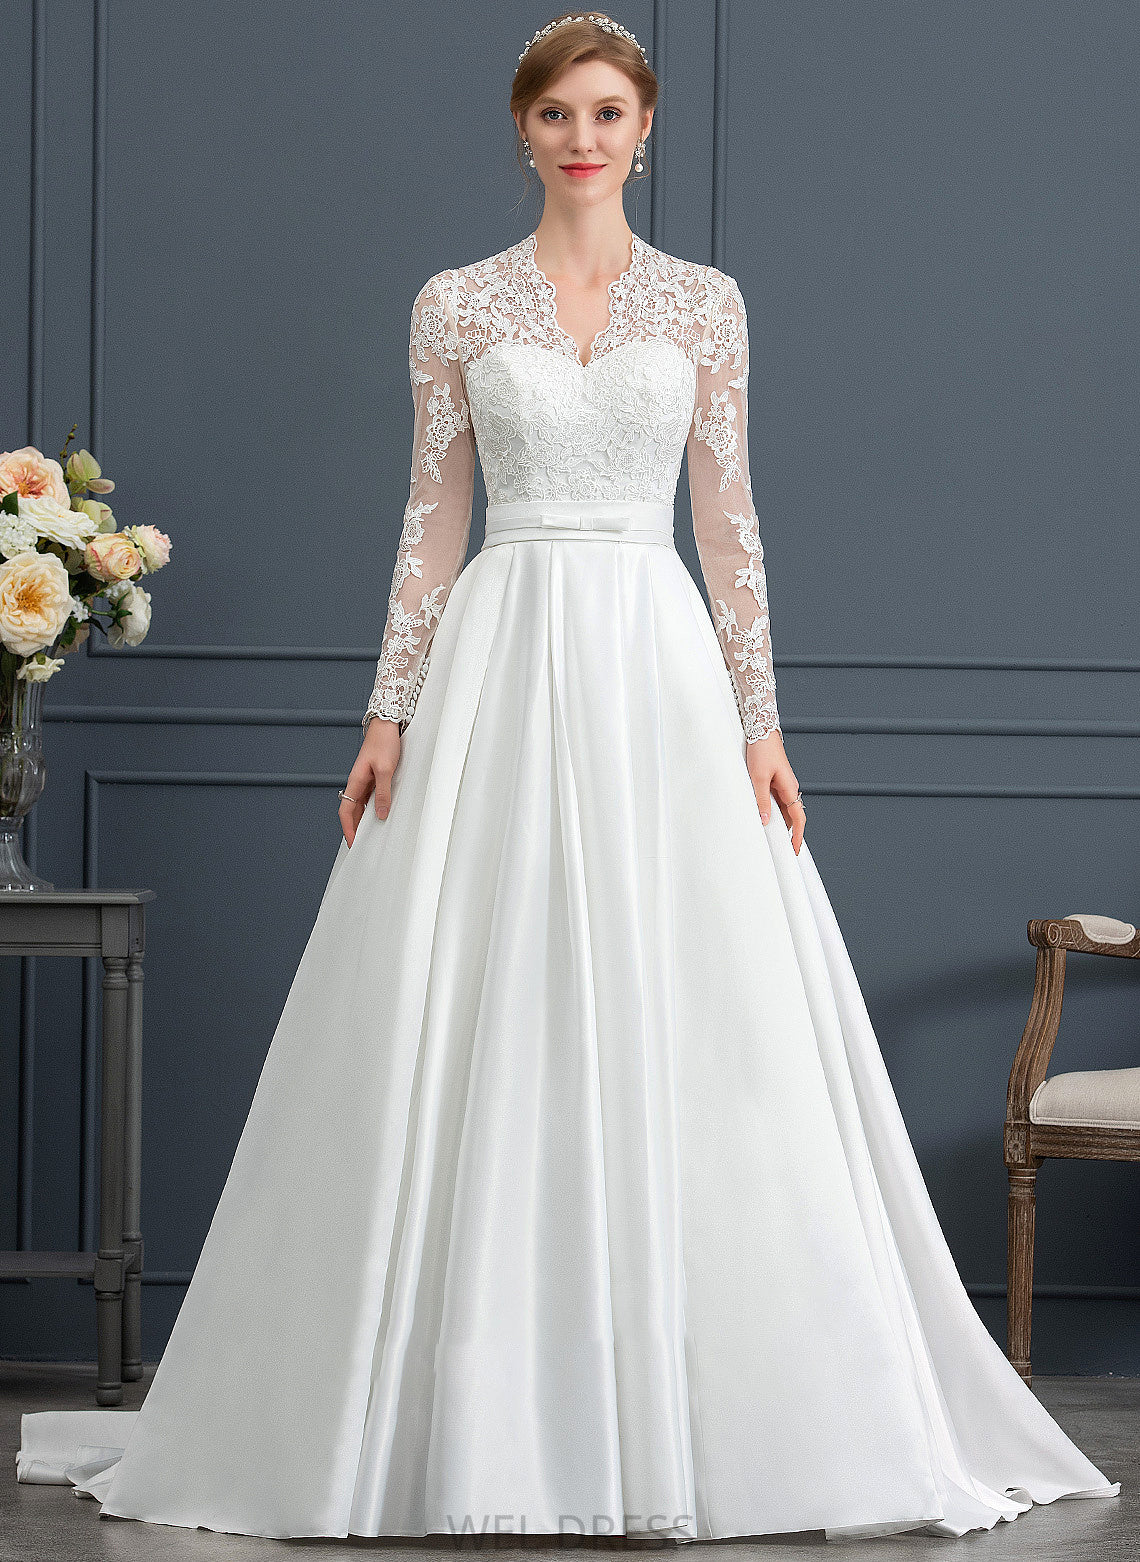 Ball-Gown/Princess Bow(s) Wedding Satin Train Dress Wedding Dresses Court Abbey V-neck With